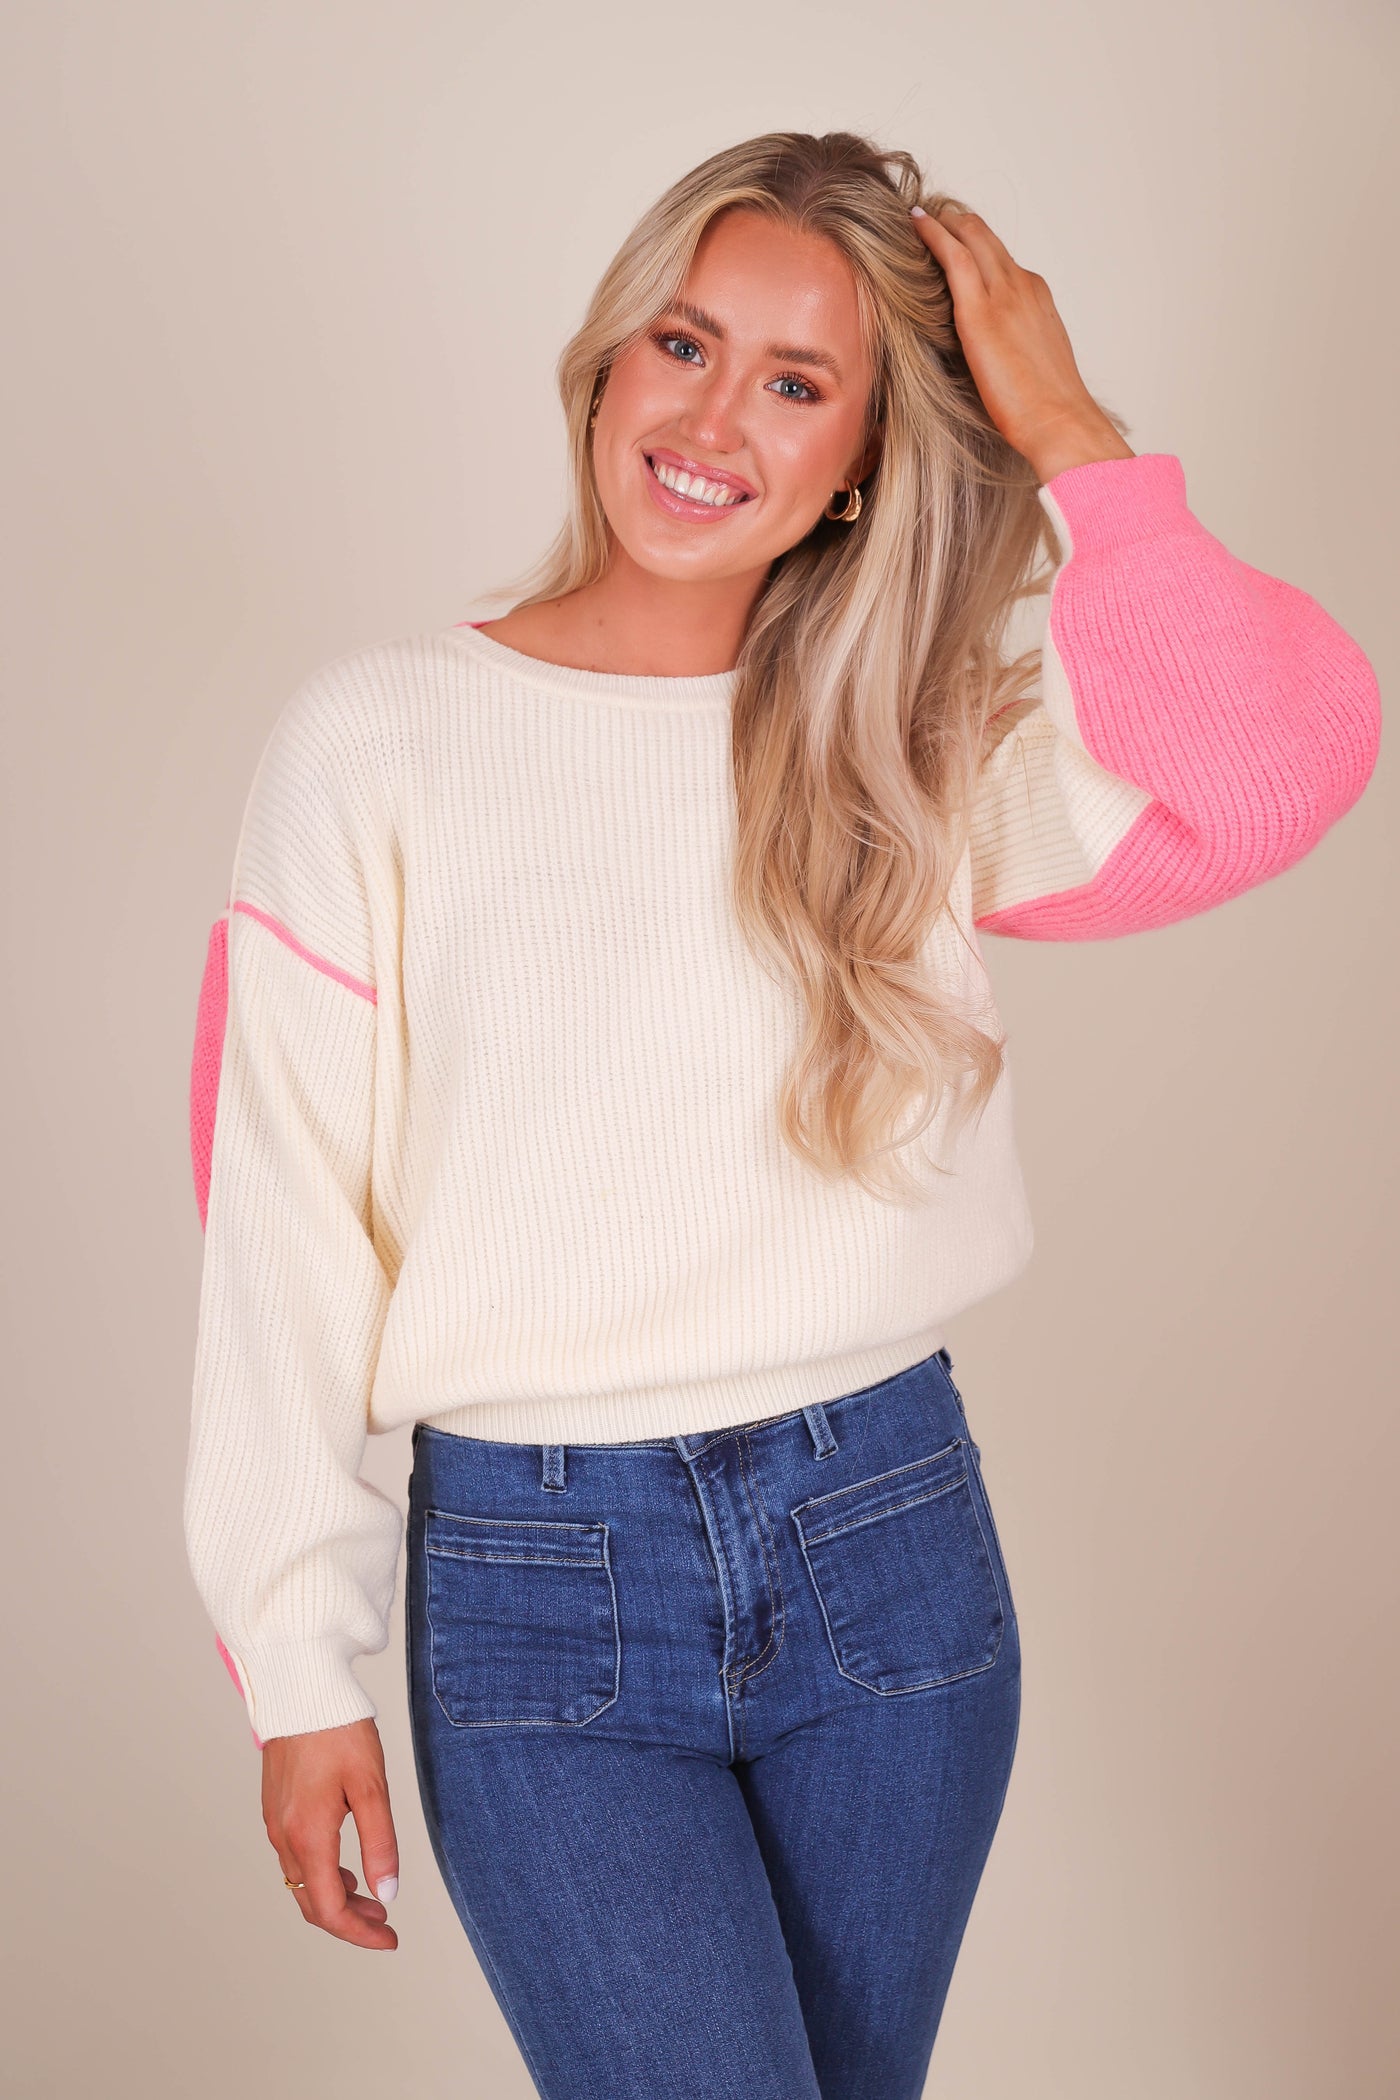 Women's Cozy Ribbed Sweater- Women's Pink Colorblock Sweater- Preppy Sweaters